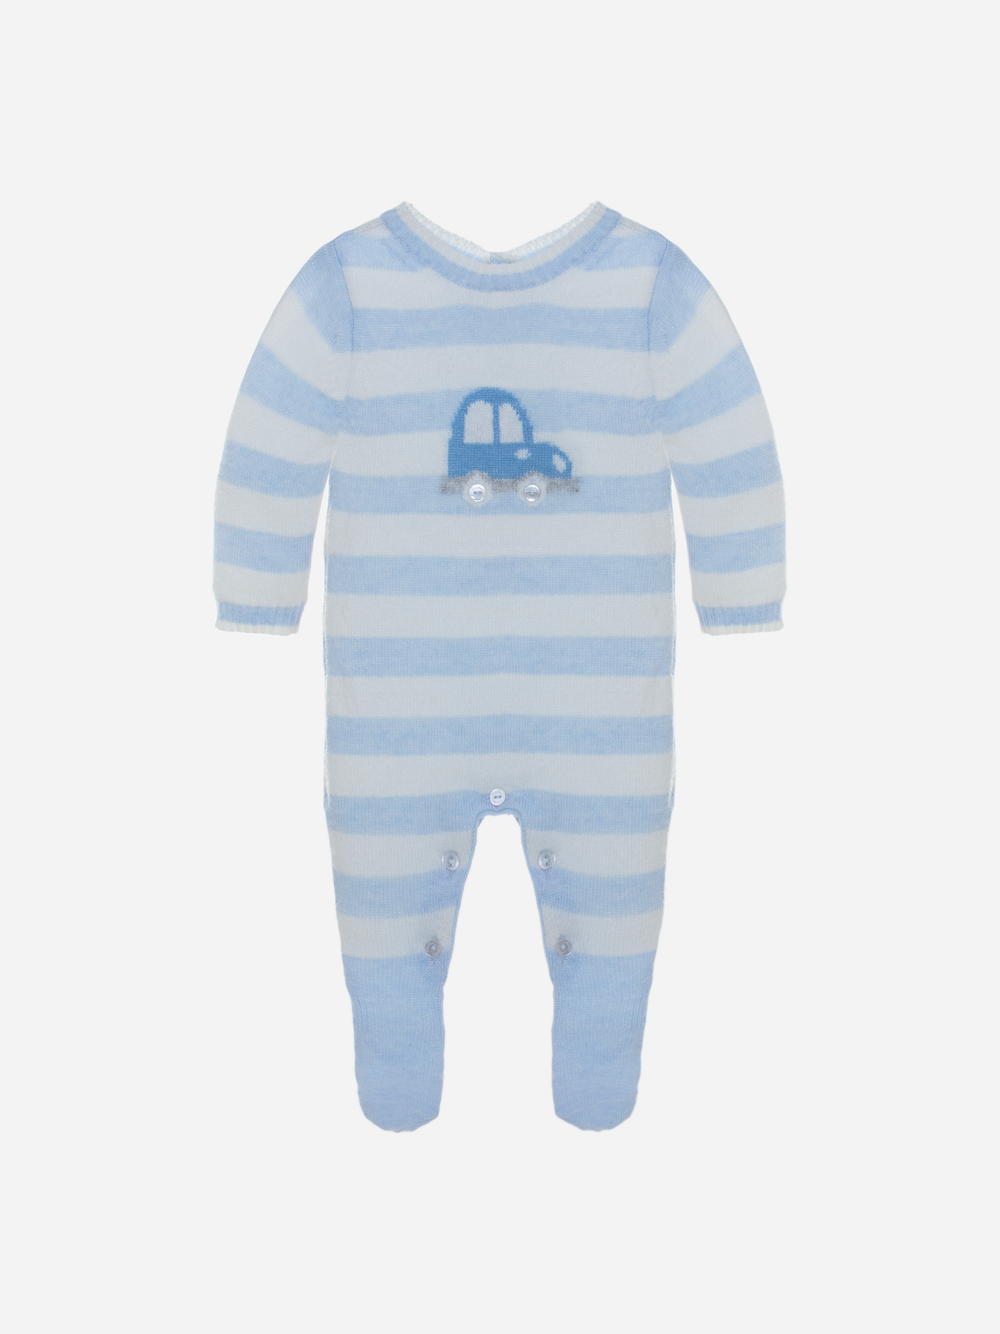 Blue striped knit babygrow